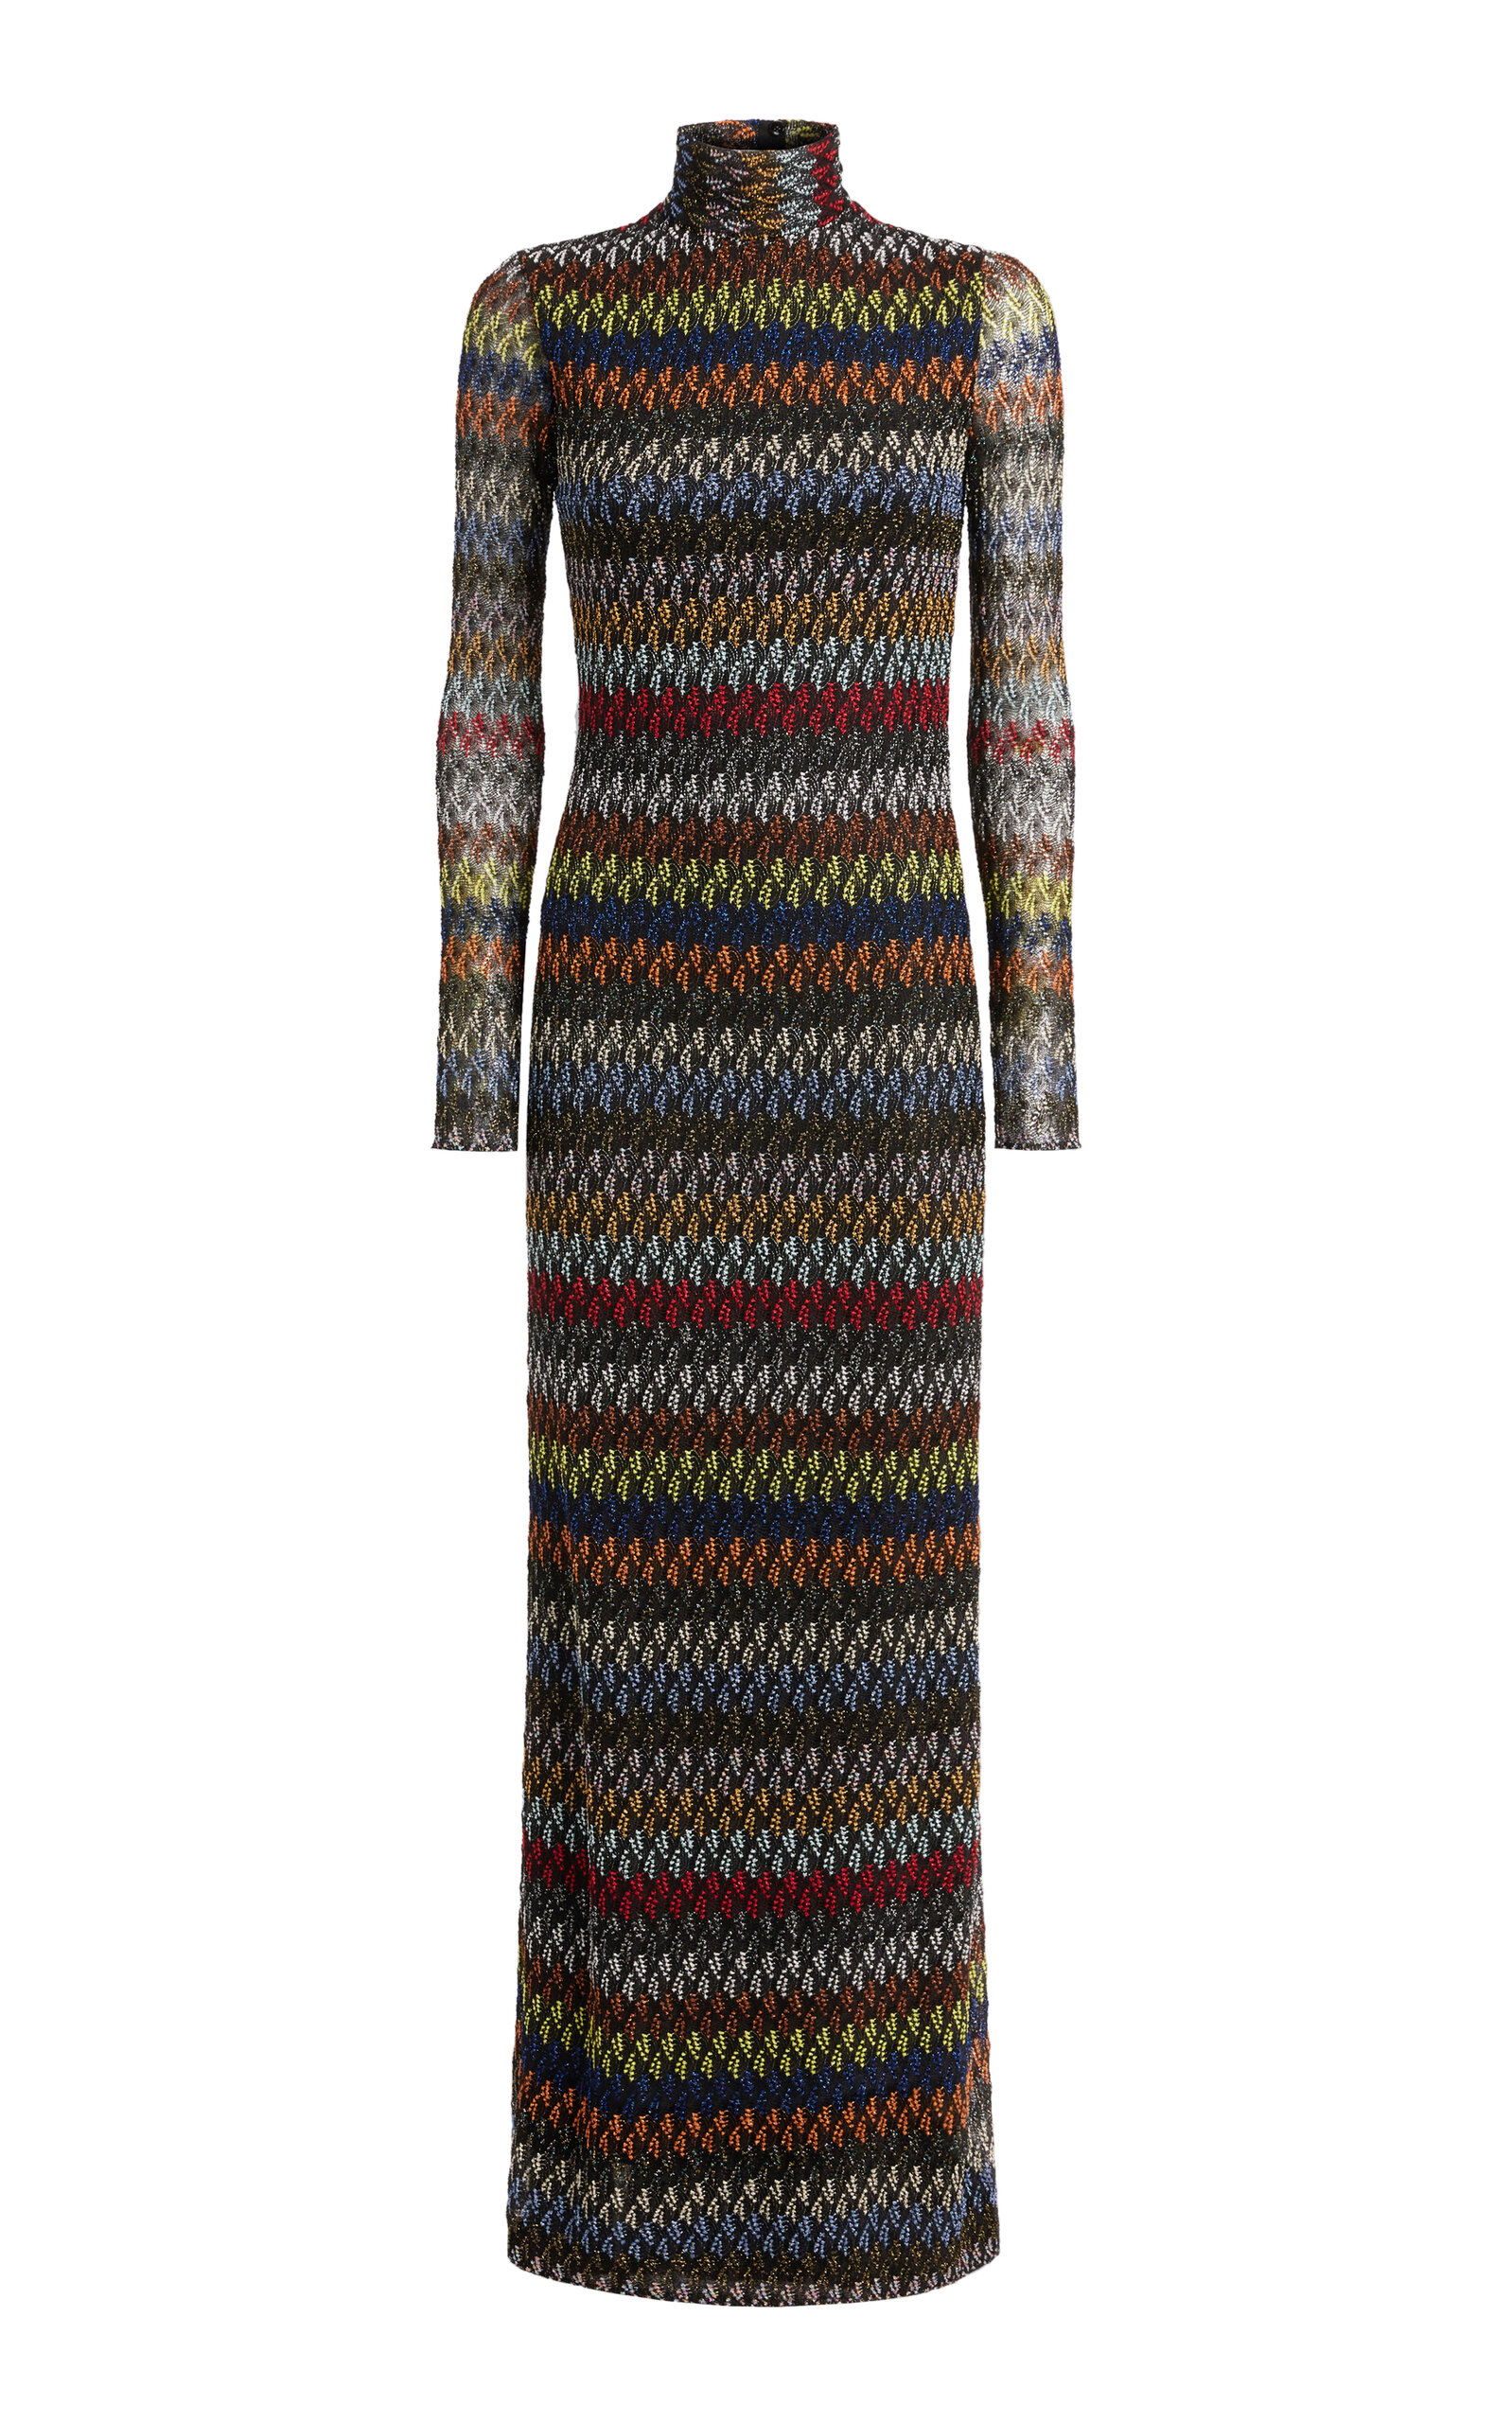 Missoni - Women's Metallic Knit Midi Dress - Multi - IT 36 - Only At Moda Operandi